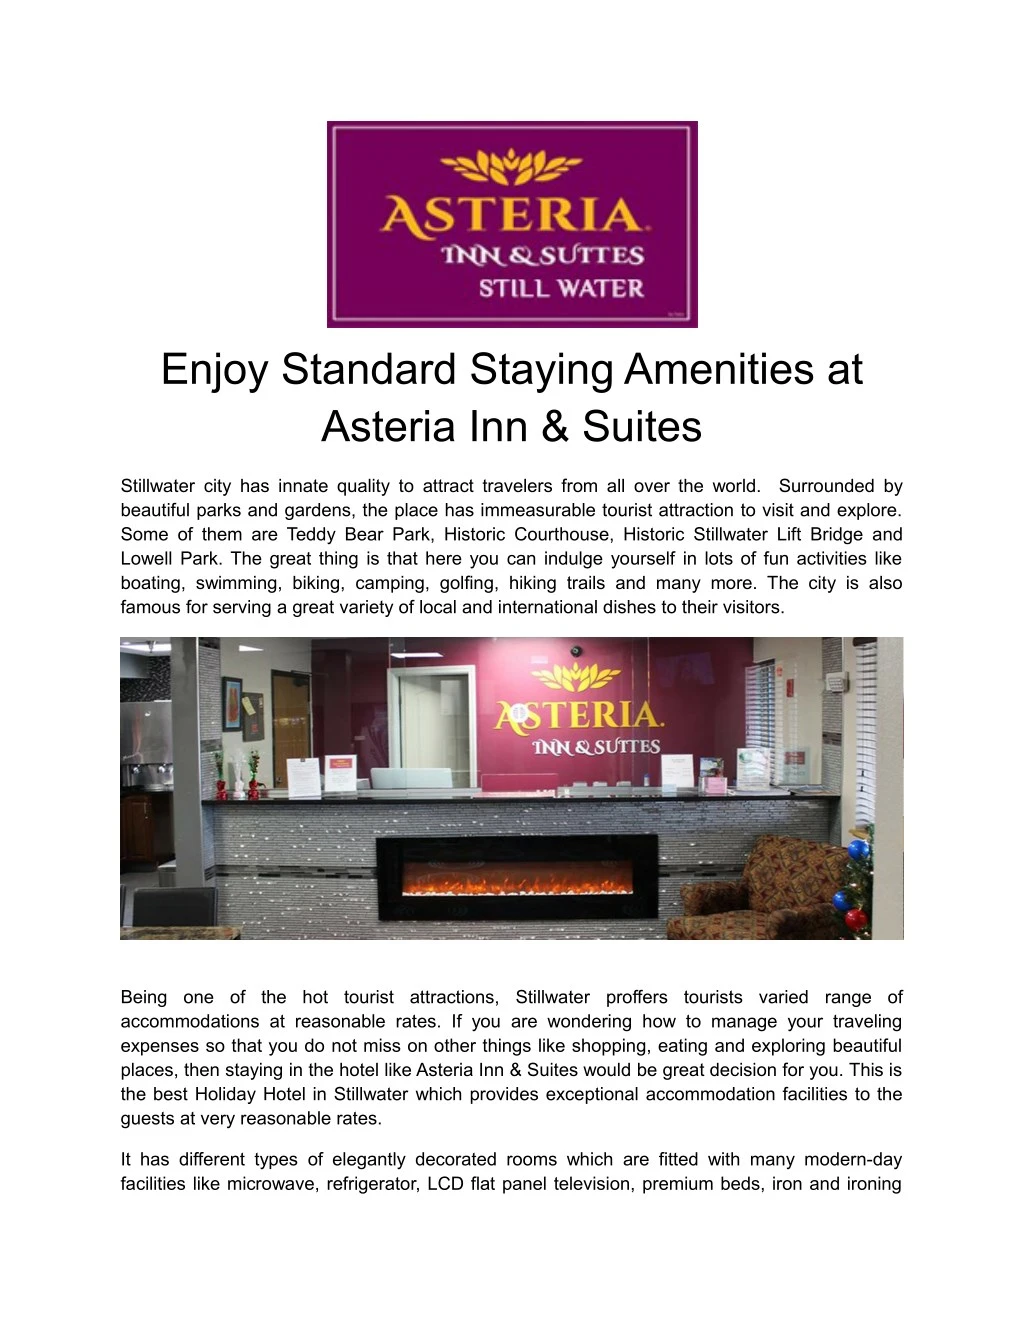 enjoy standard staying amenities at asteria